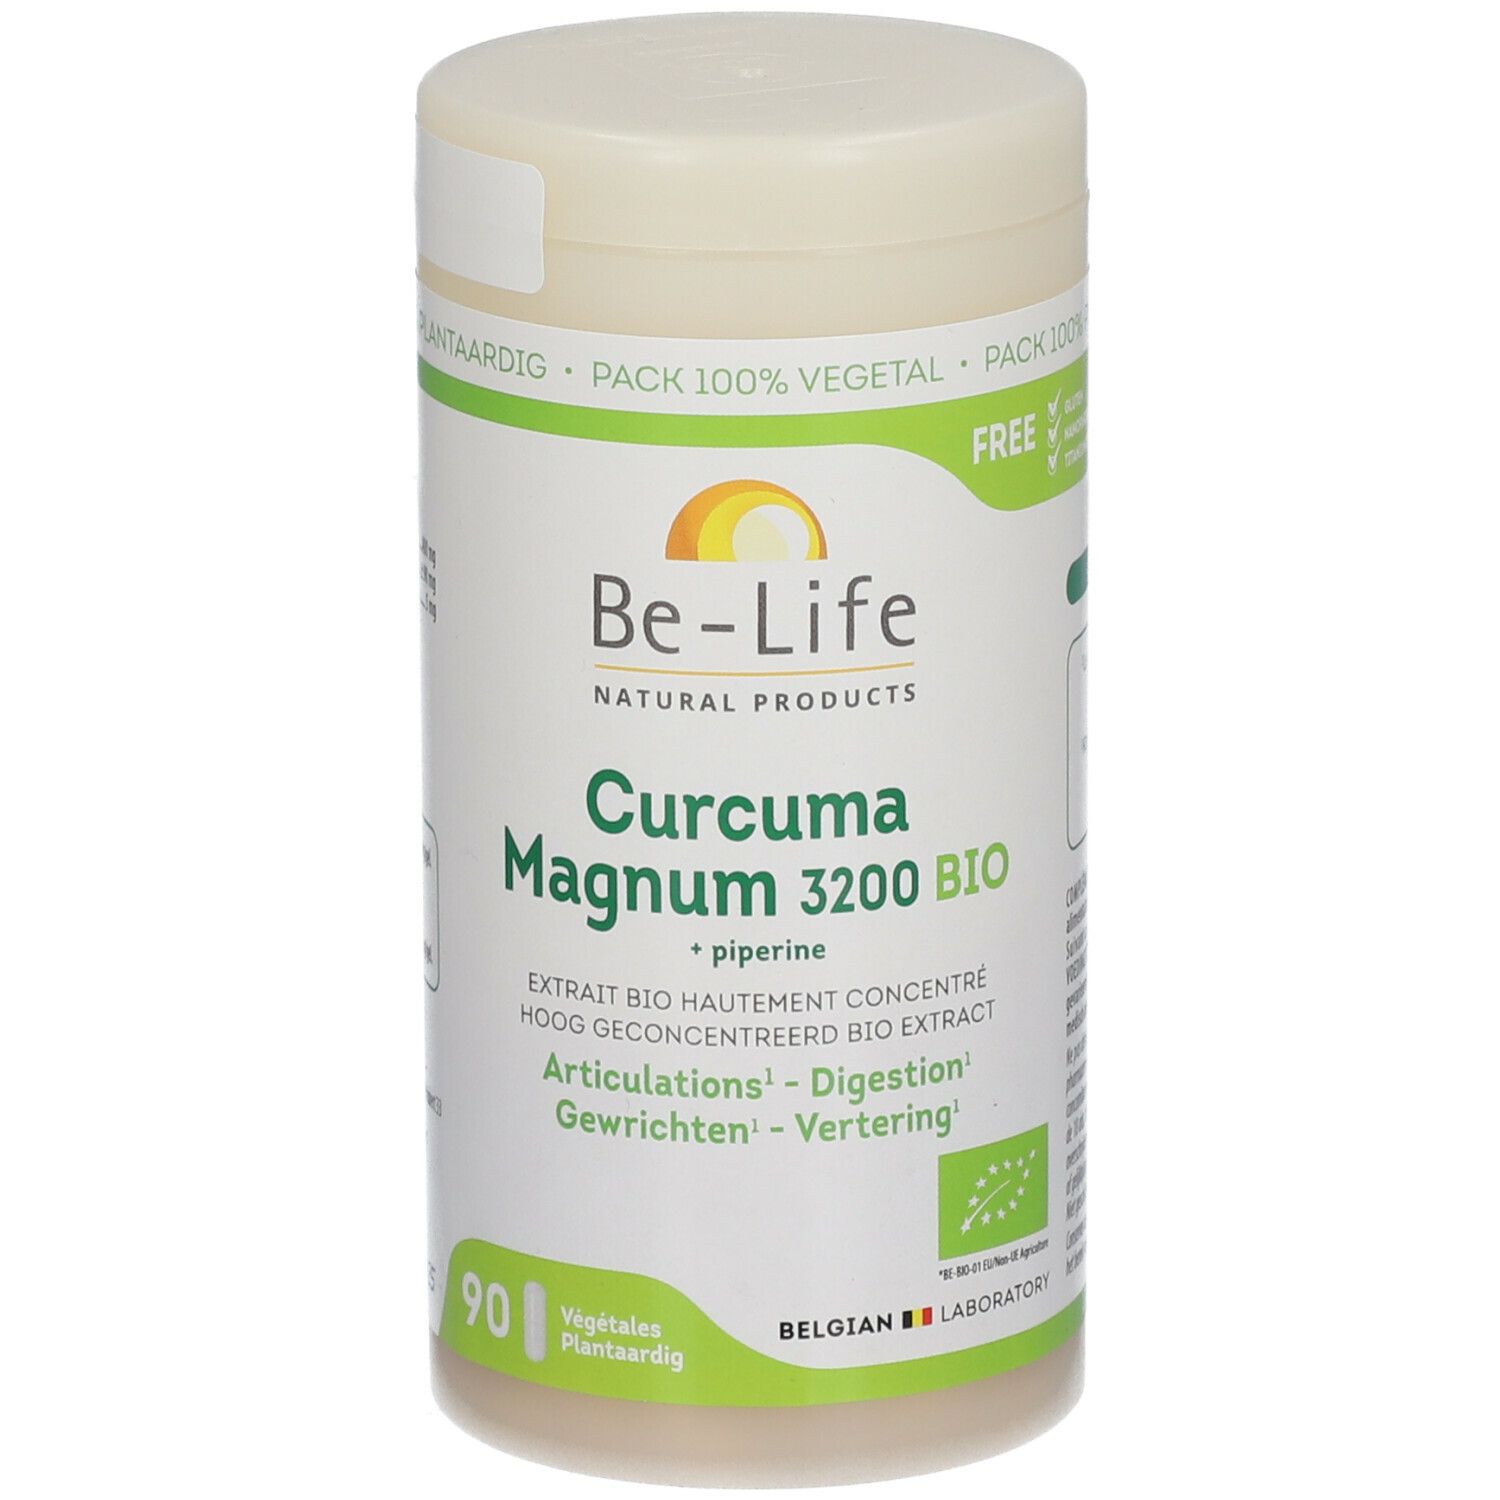 Be-Life Curcuma Magnum 3200 BIO